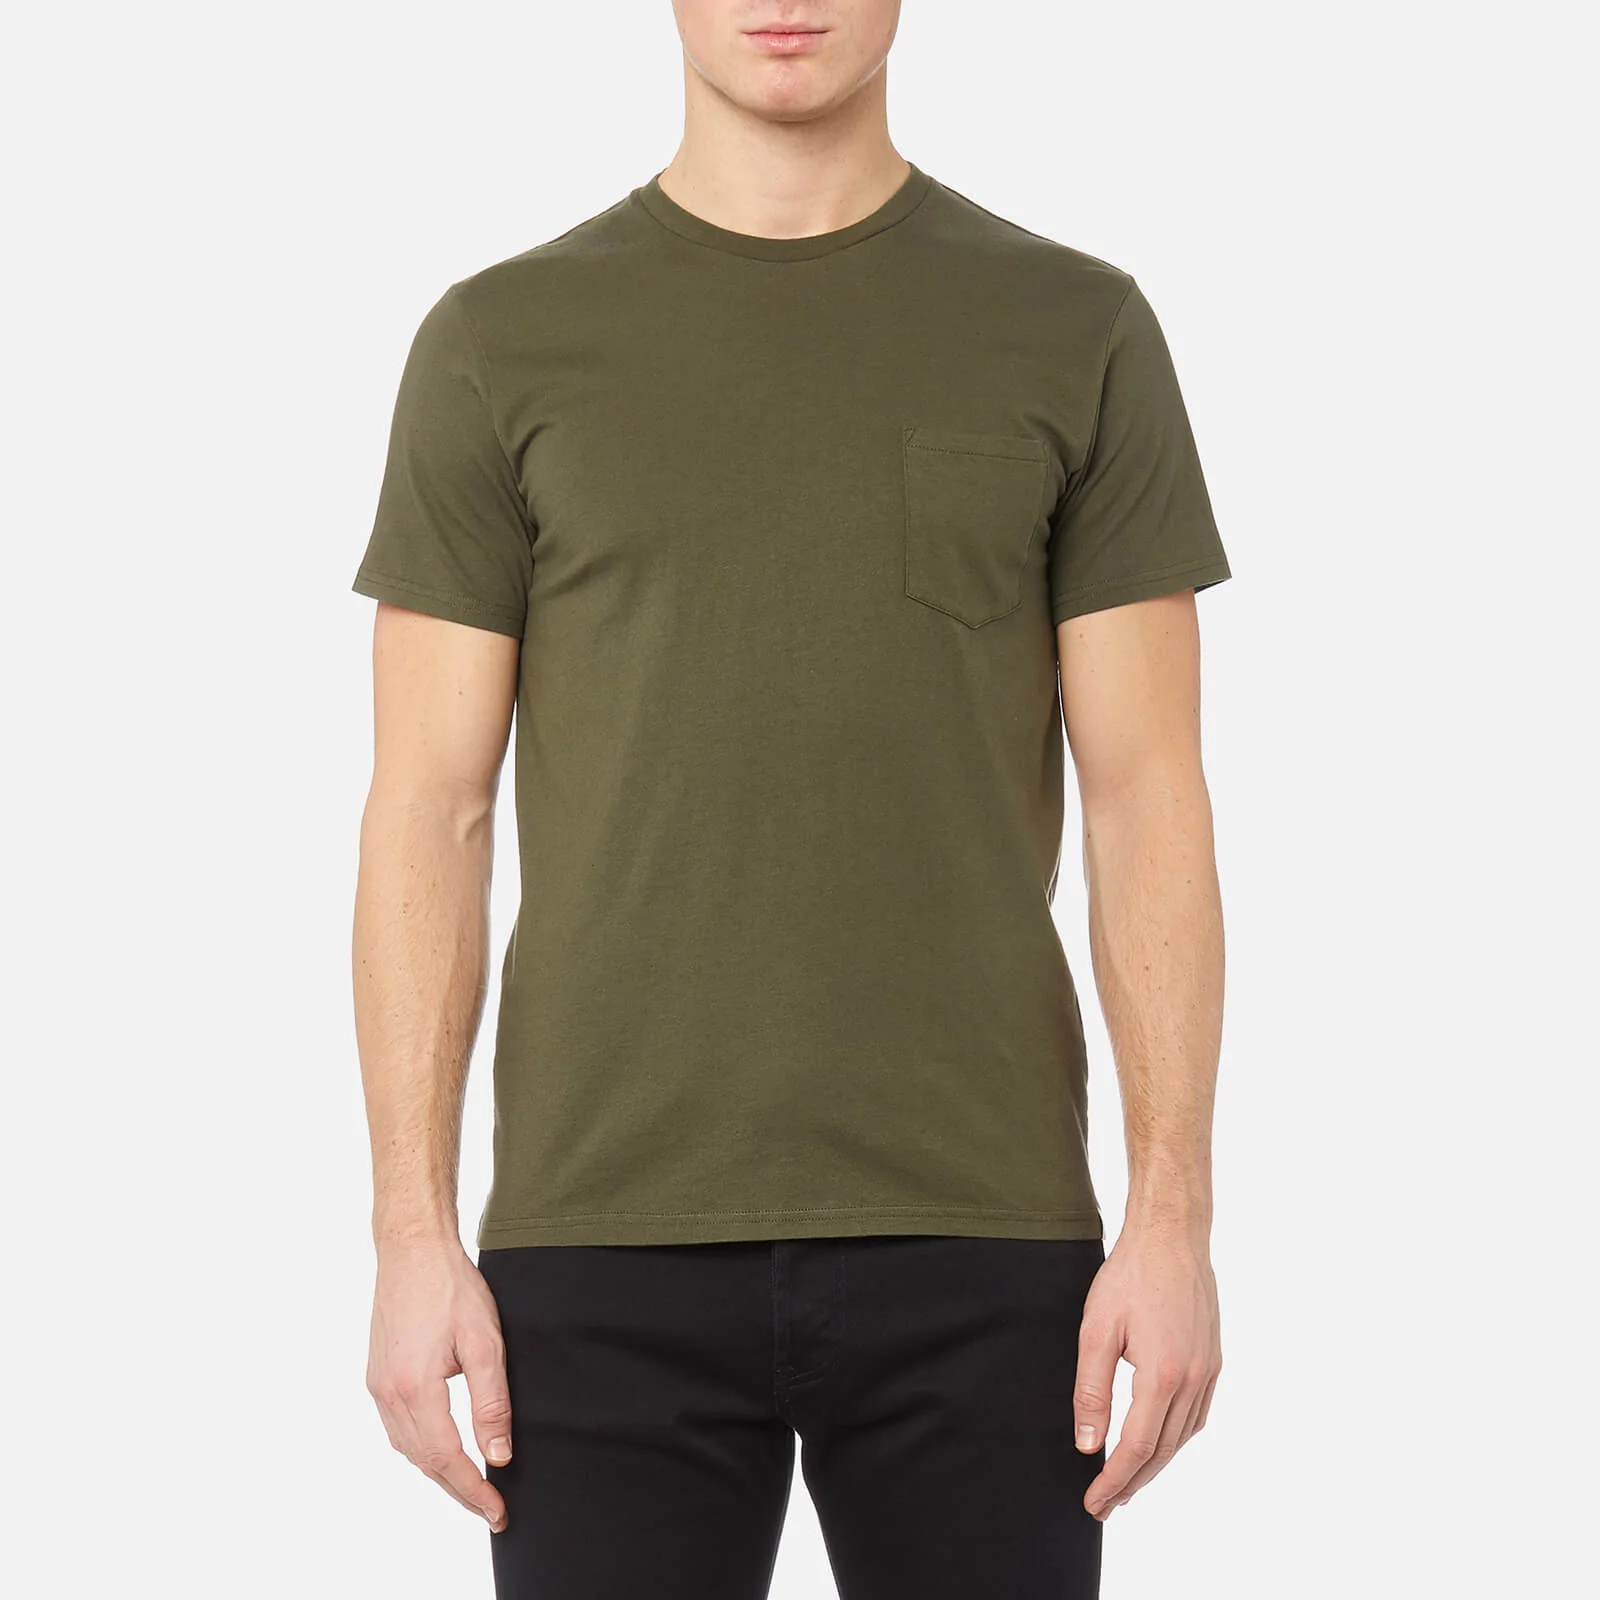 Edwin Men's Pocket T-Shirt - Olive Drab Image 1